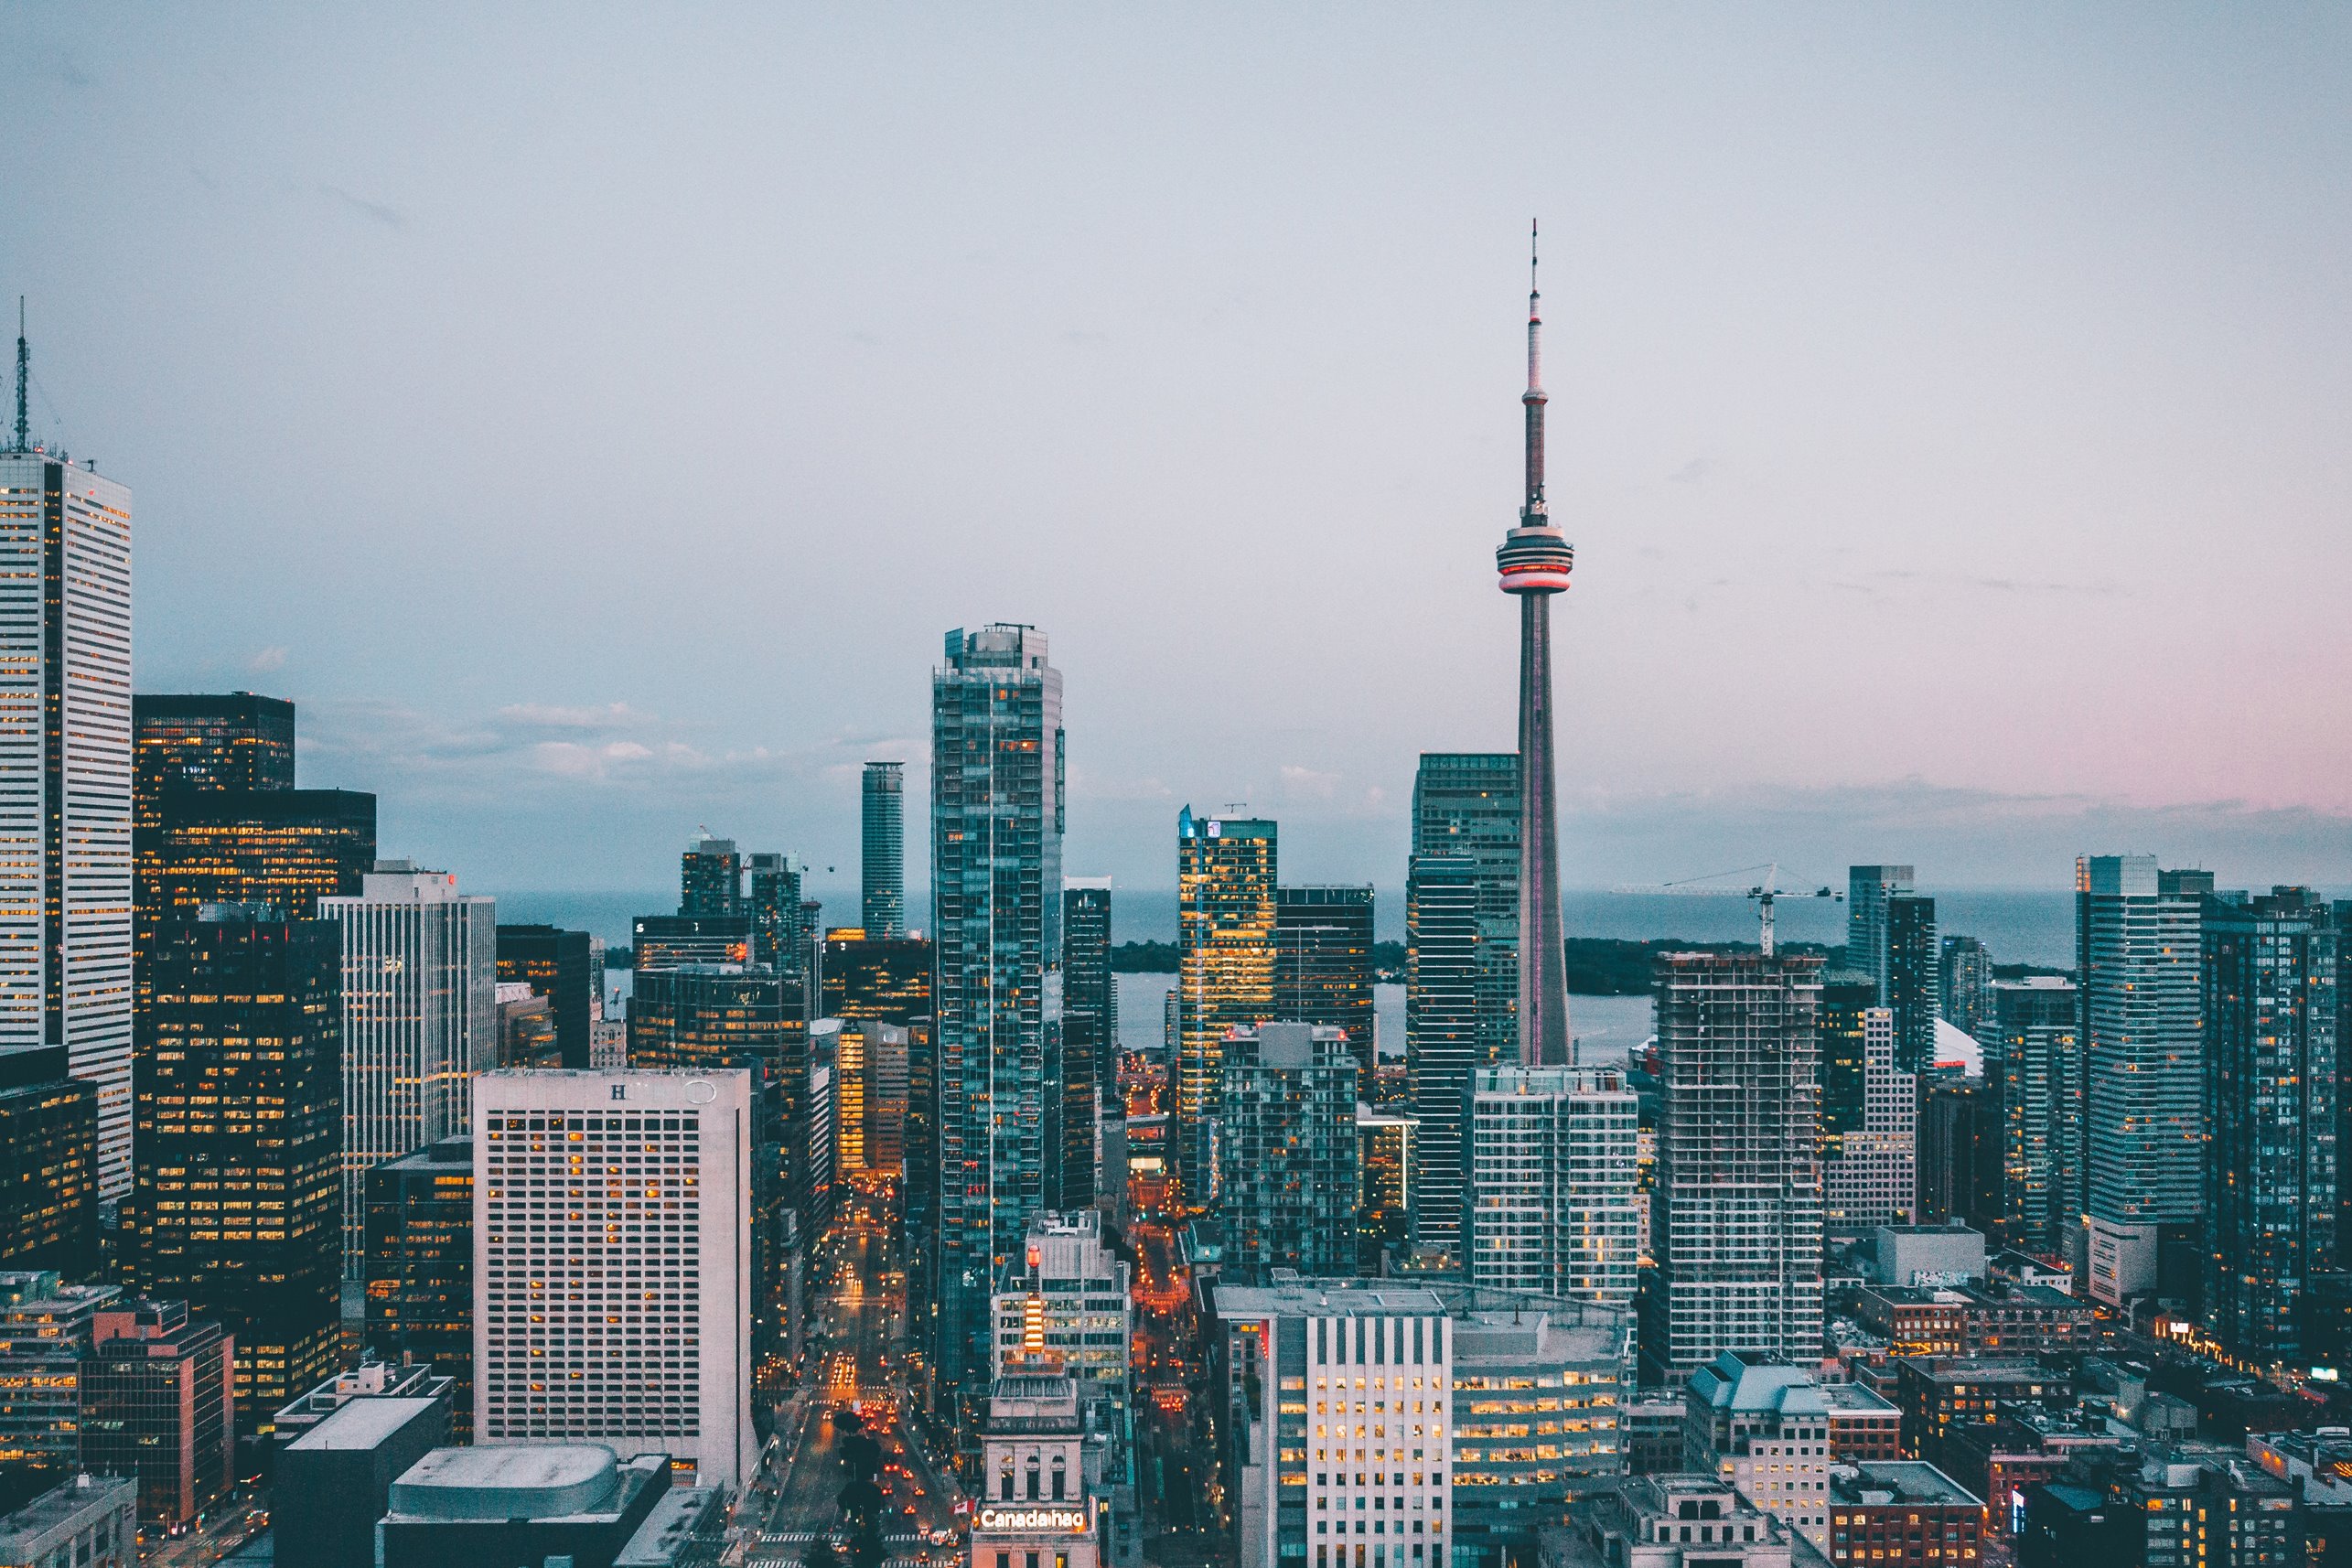 Skyline shot of Downtown Toronto.